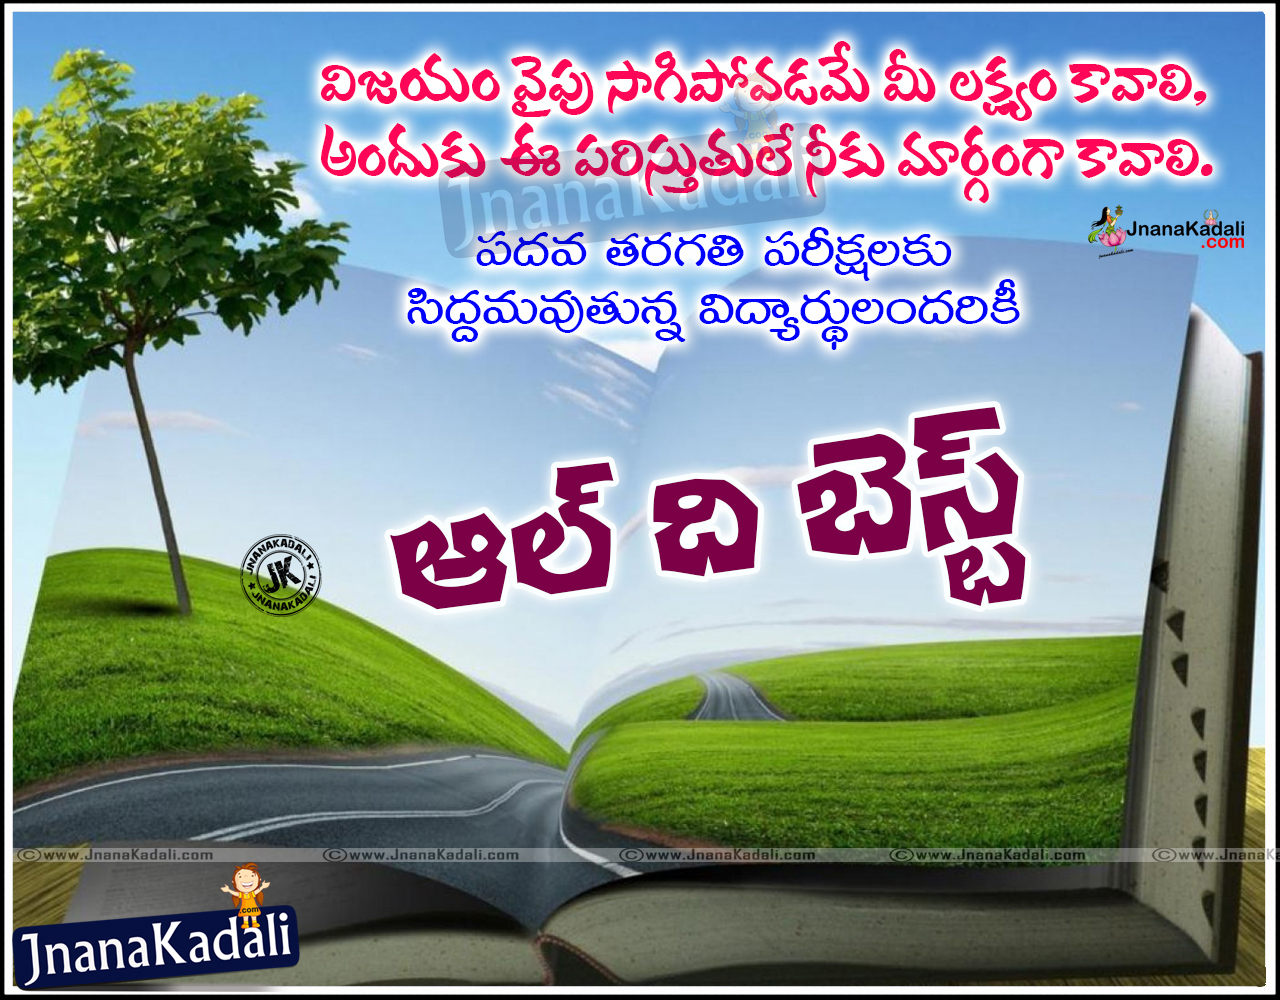 Telugu all the best messages for boss Telugu wishing all the best messages Telugu